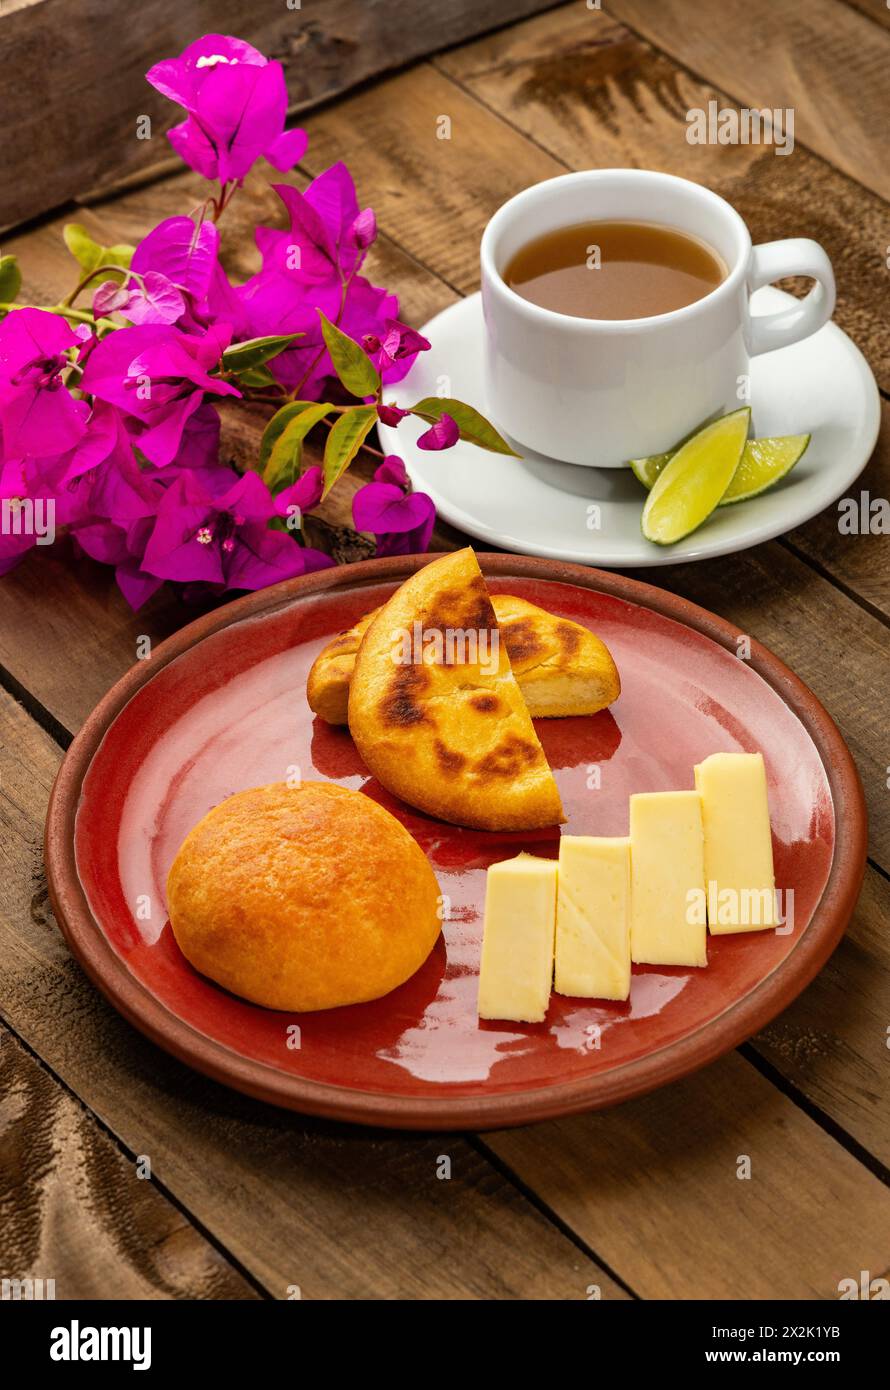 Arepa, almojabana, cheese and hot aguapanela - Typical Colombian breakfast Stock Photo